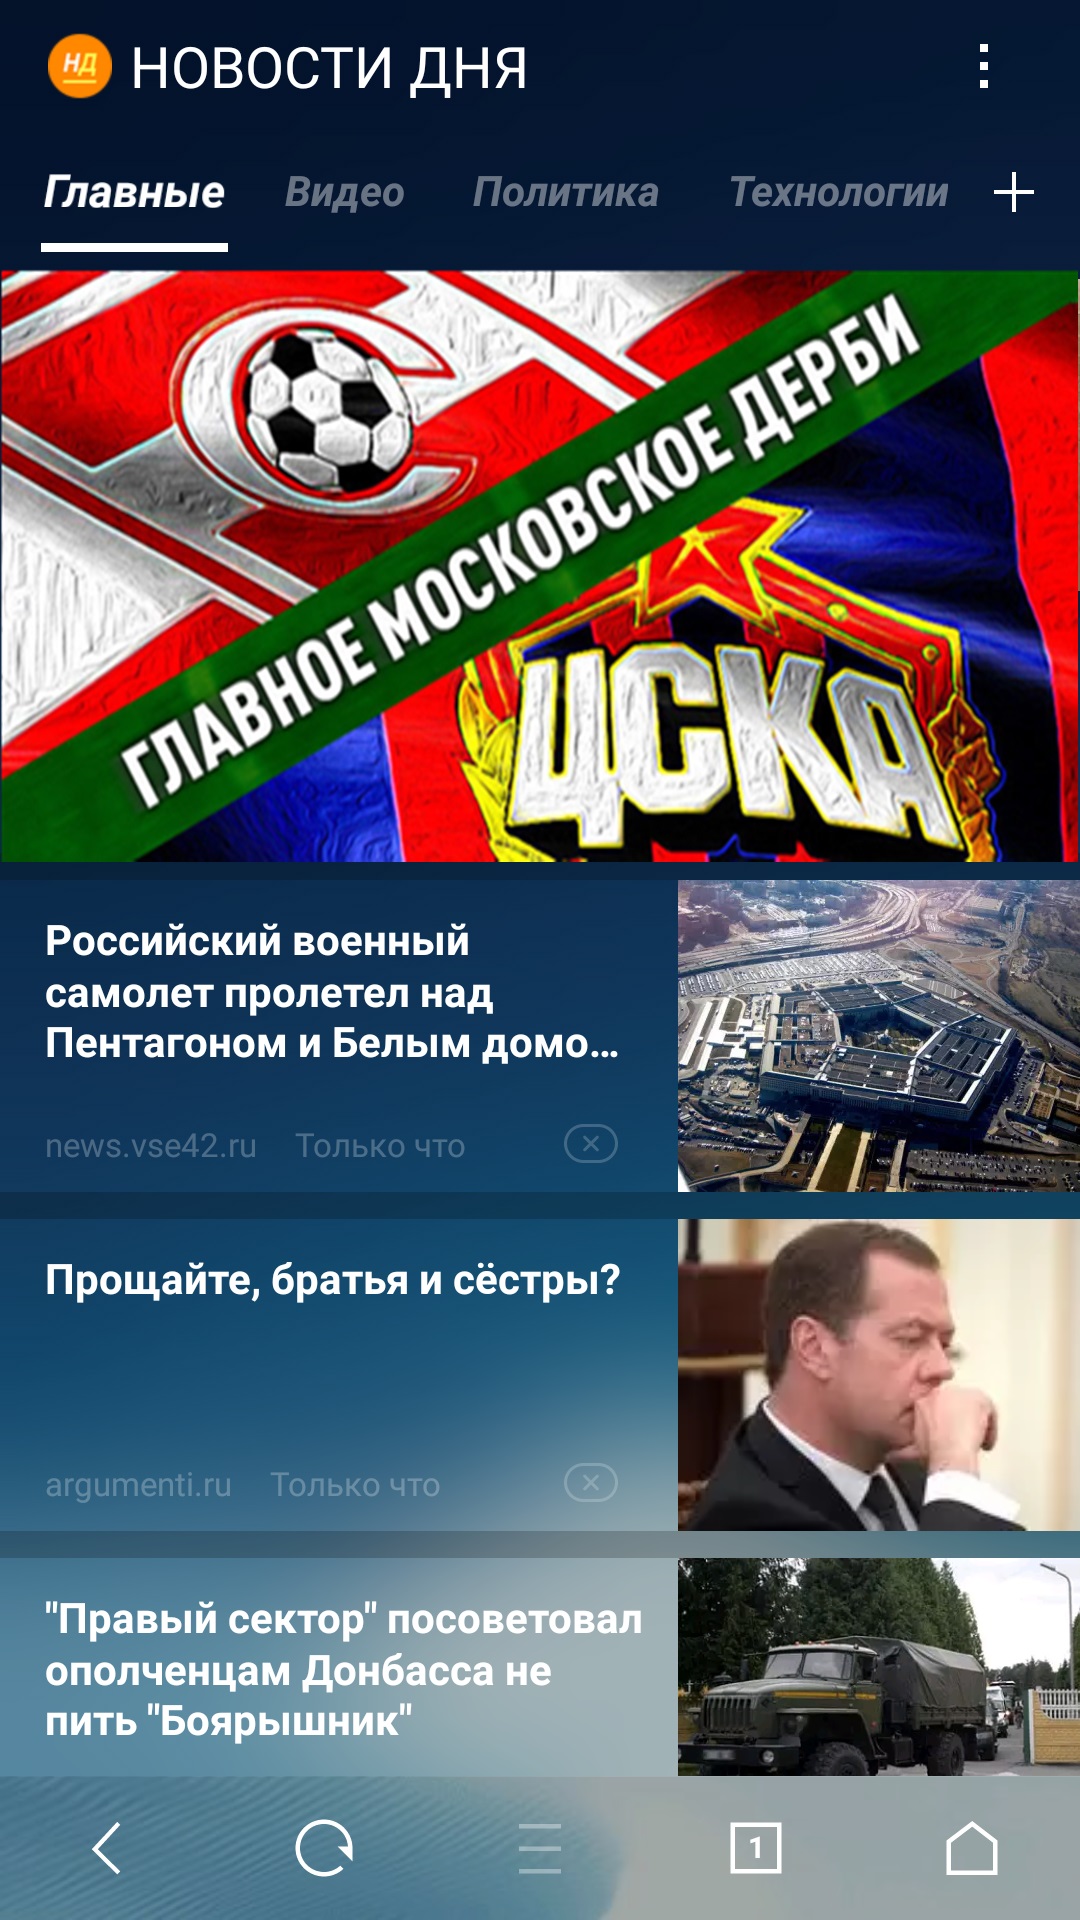 реклама чемпионата россии +по футболу